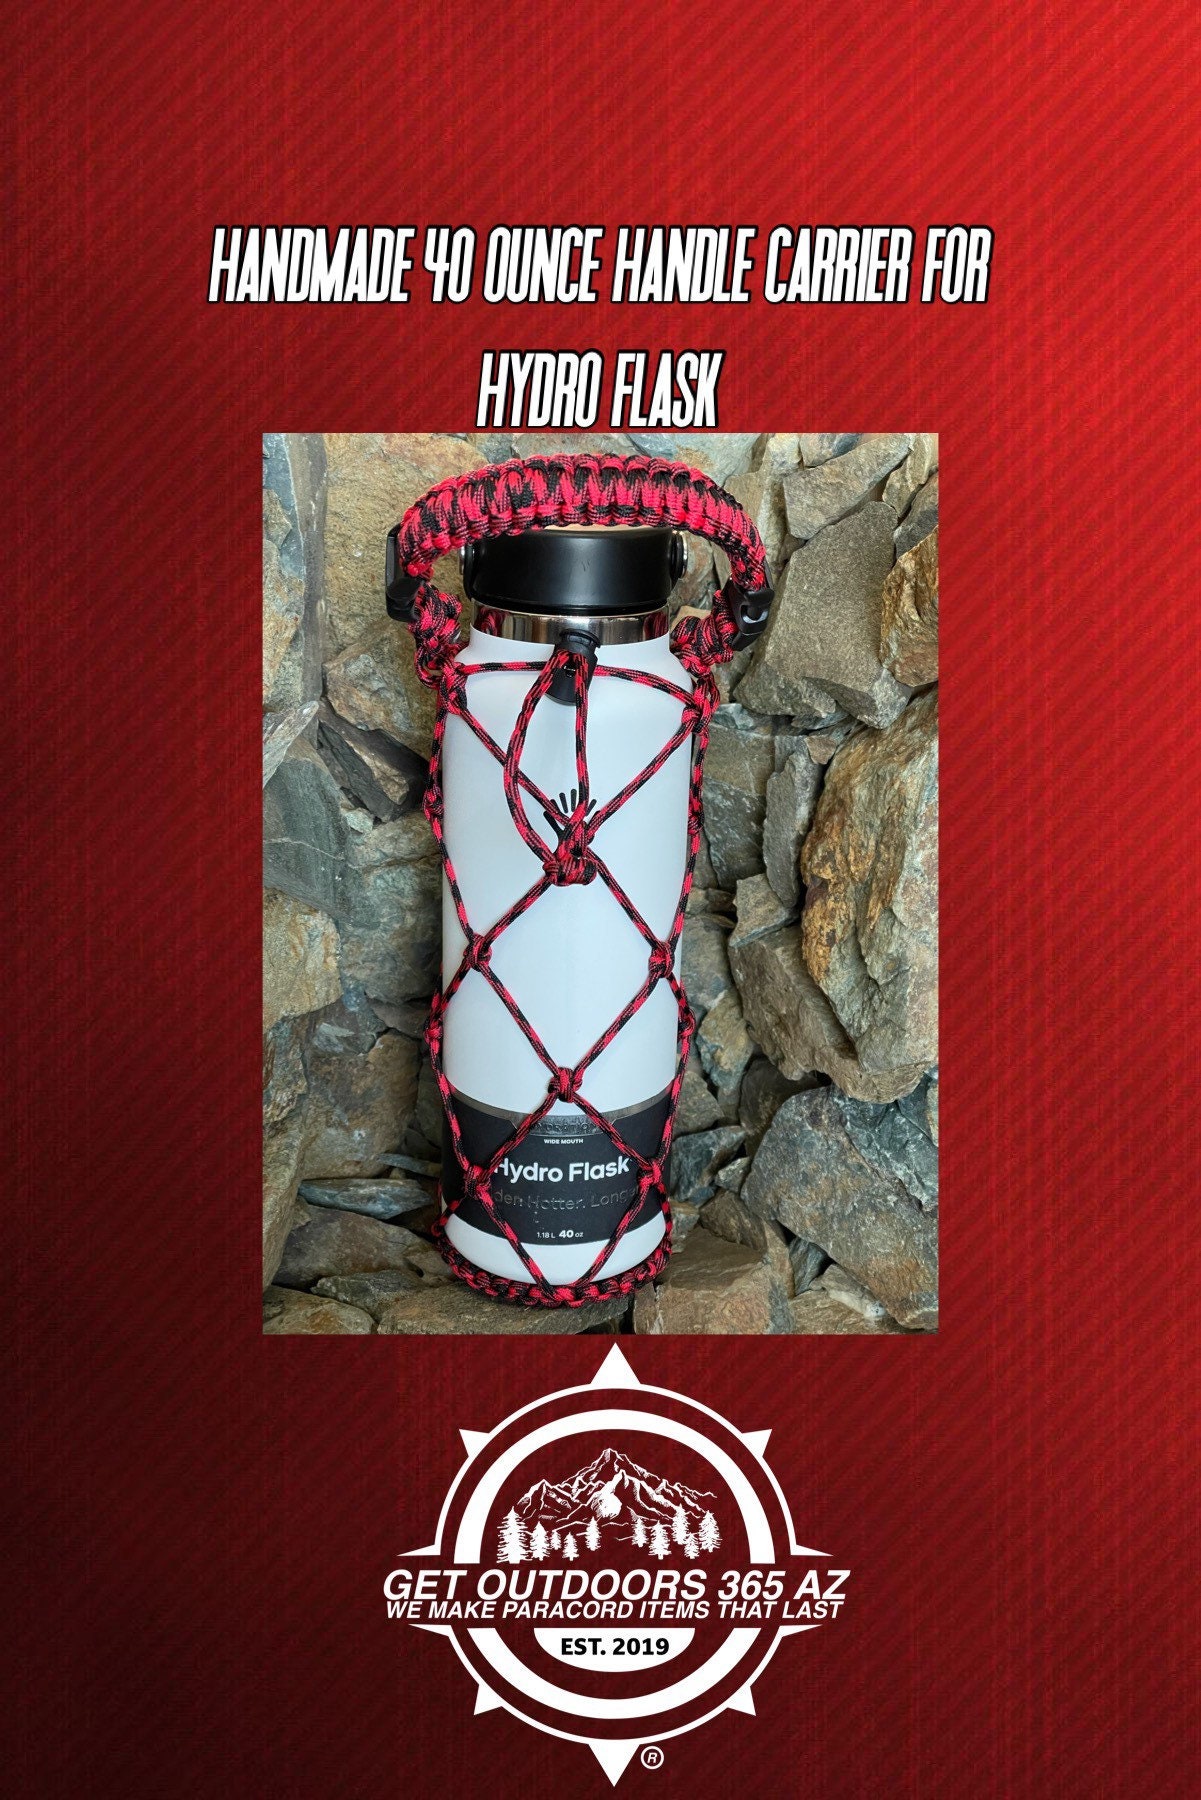 Hydrapeak Insulated Stainless Steel Water Bottle 32 oz Colorful Skull and  Crossbones - Total Turmoil Vintage